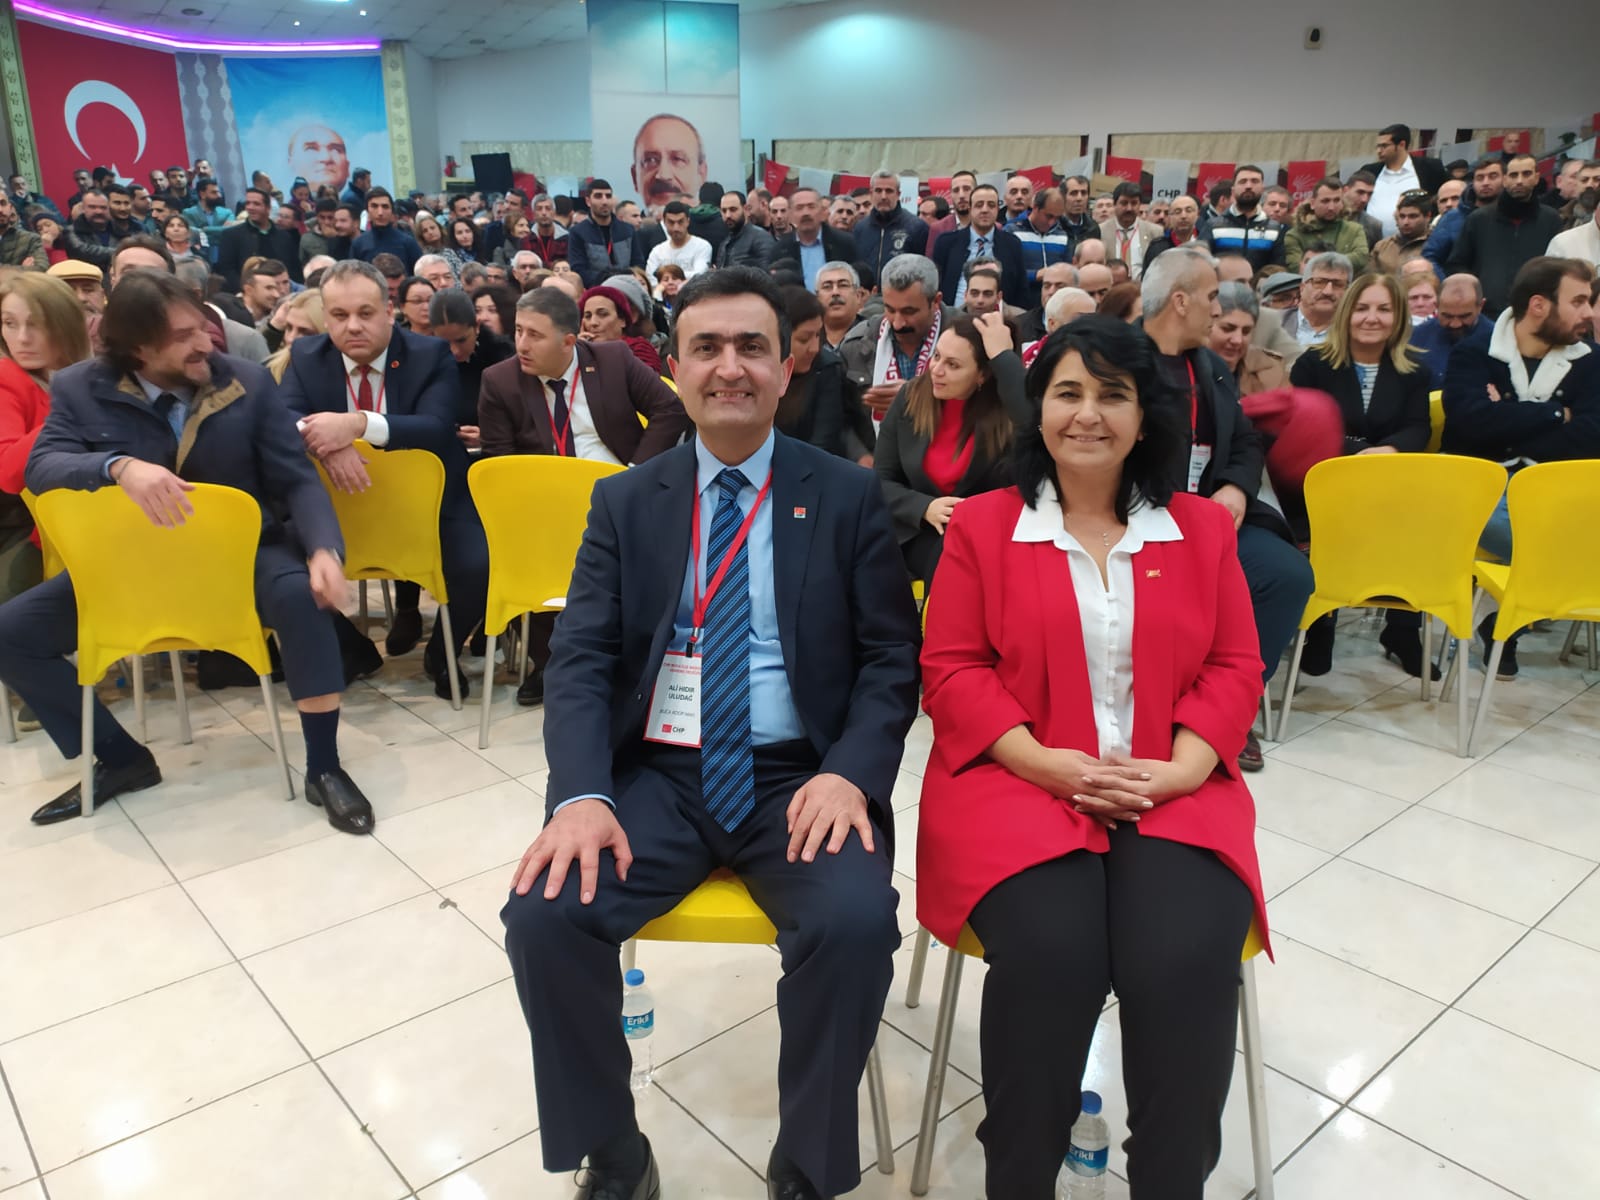 CHP Buca'da kongre heyecanı